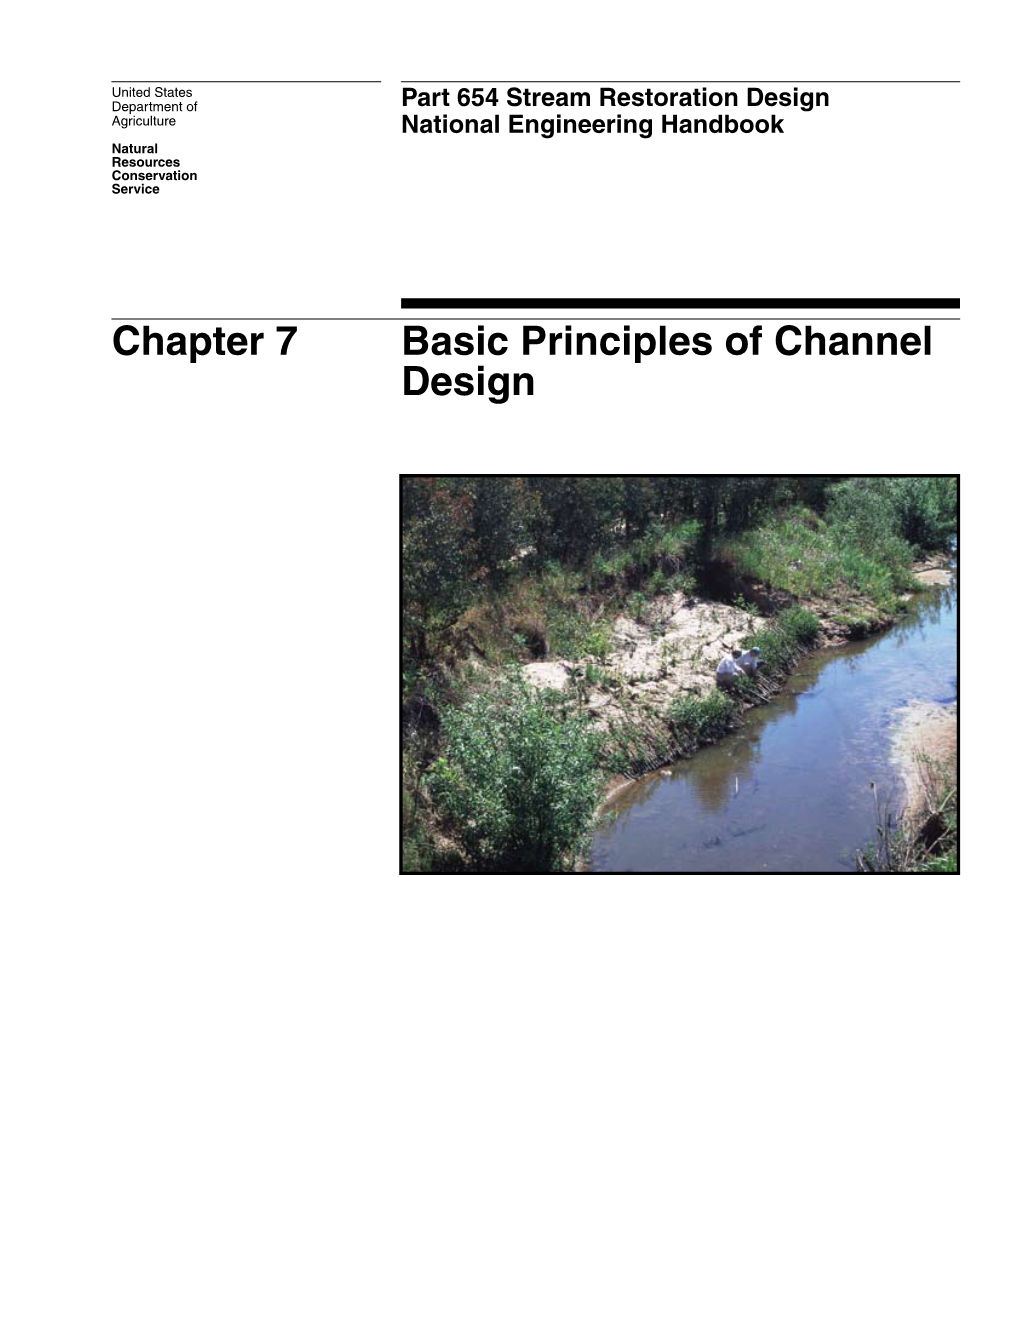 Basic Principles of Channel Design Chapter 7 Basic Principles of Channel Design Part 654 National Engineering Handbook